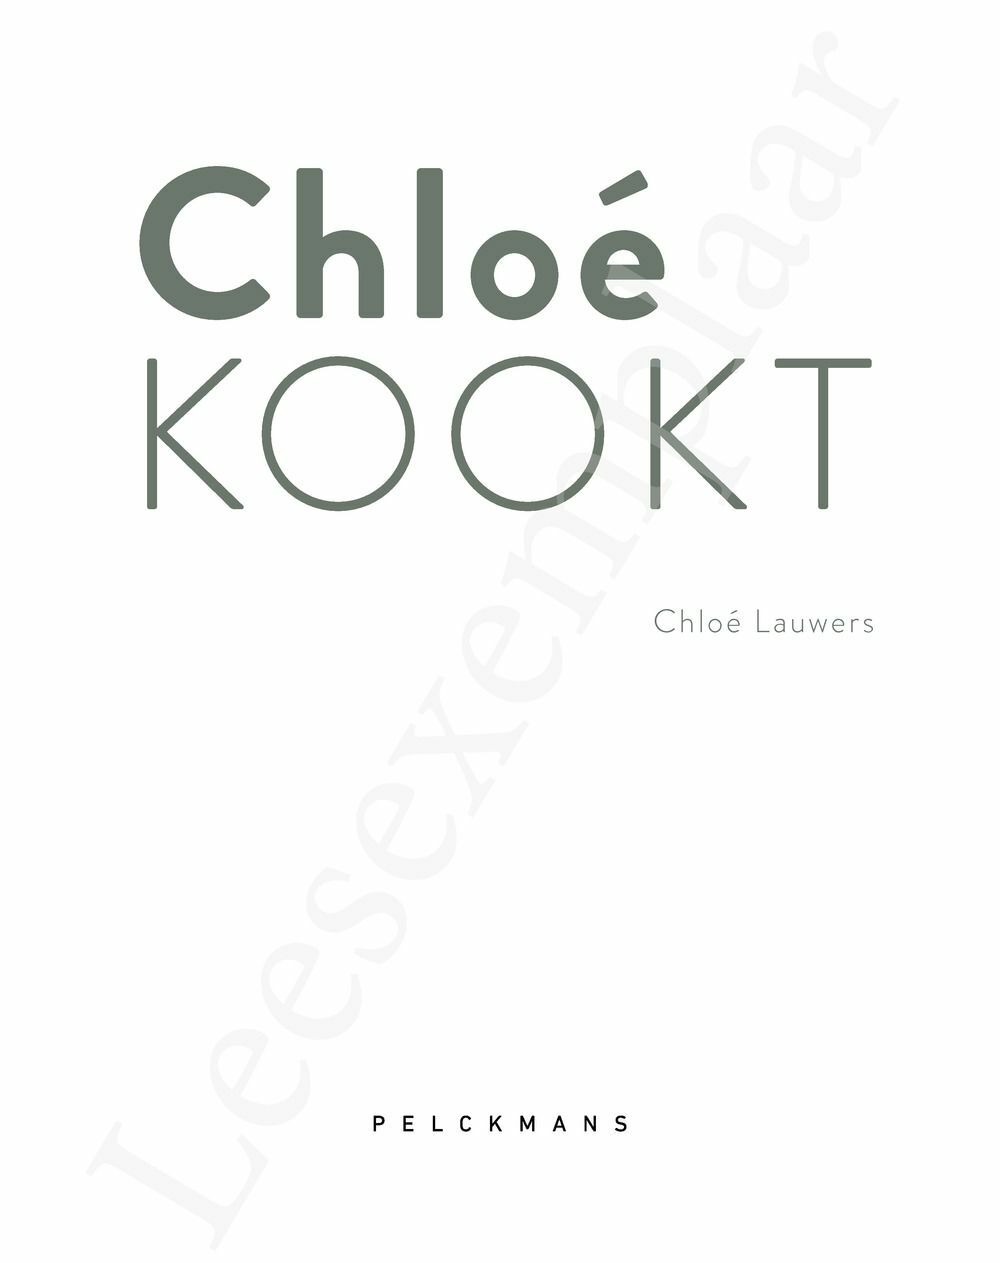 Preview: Chloé Kookt